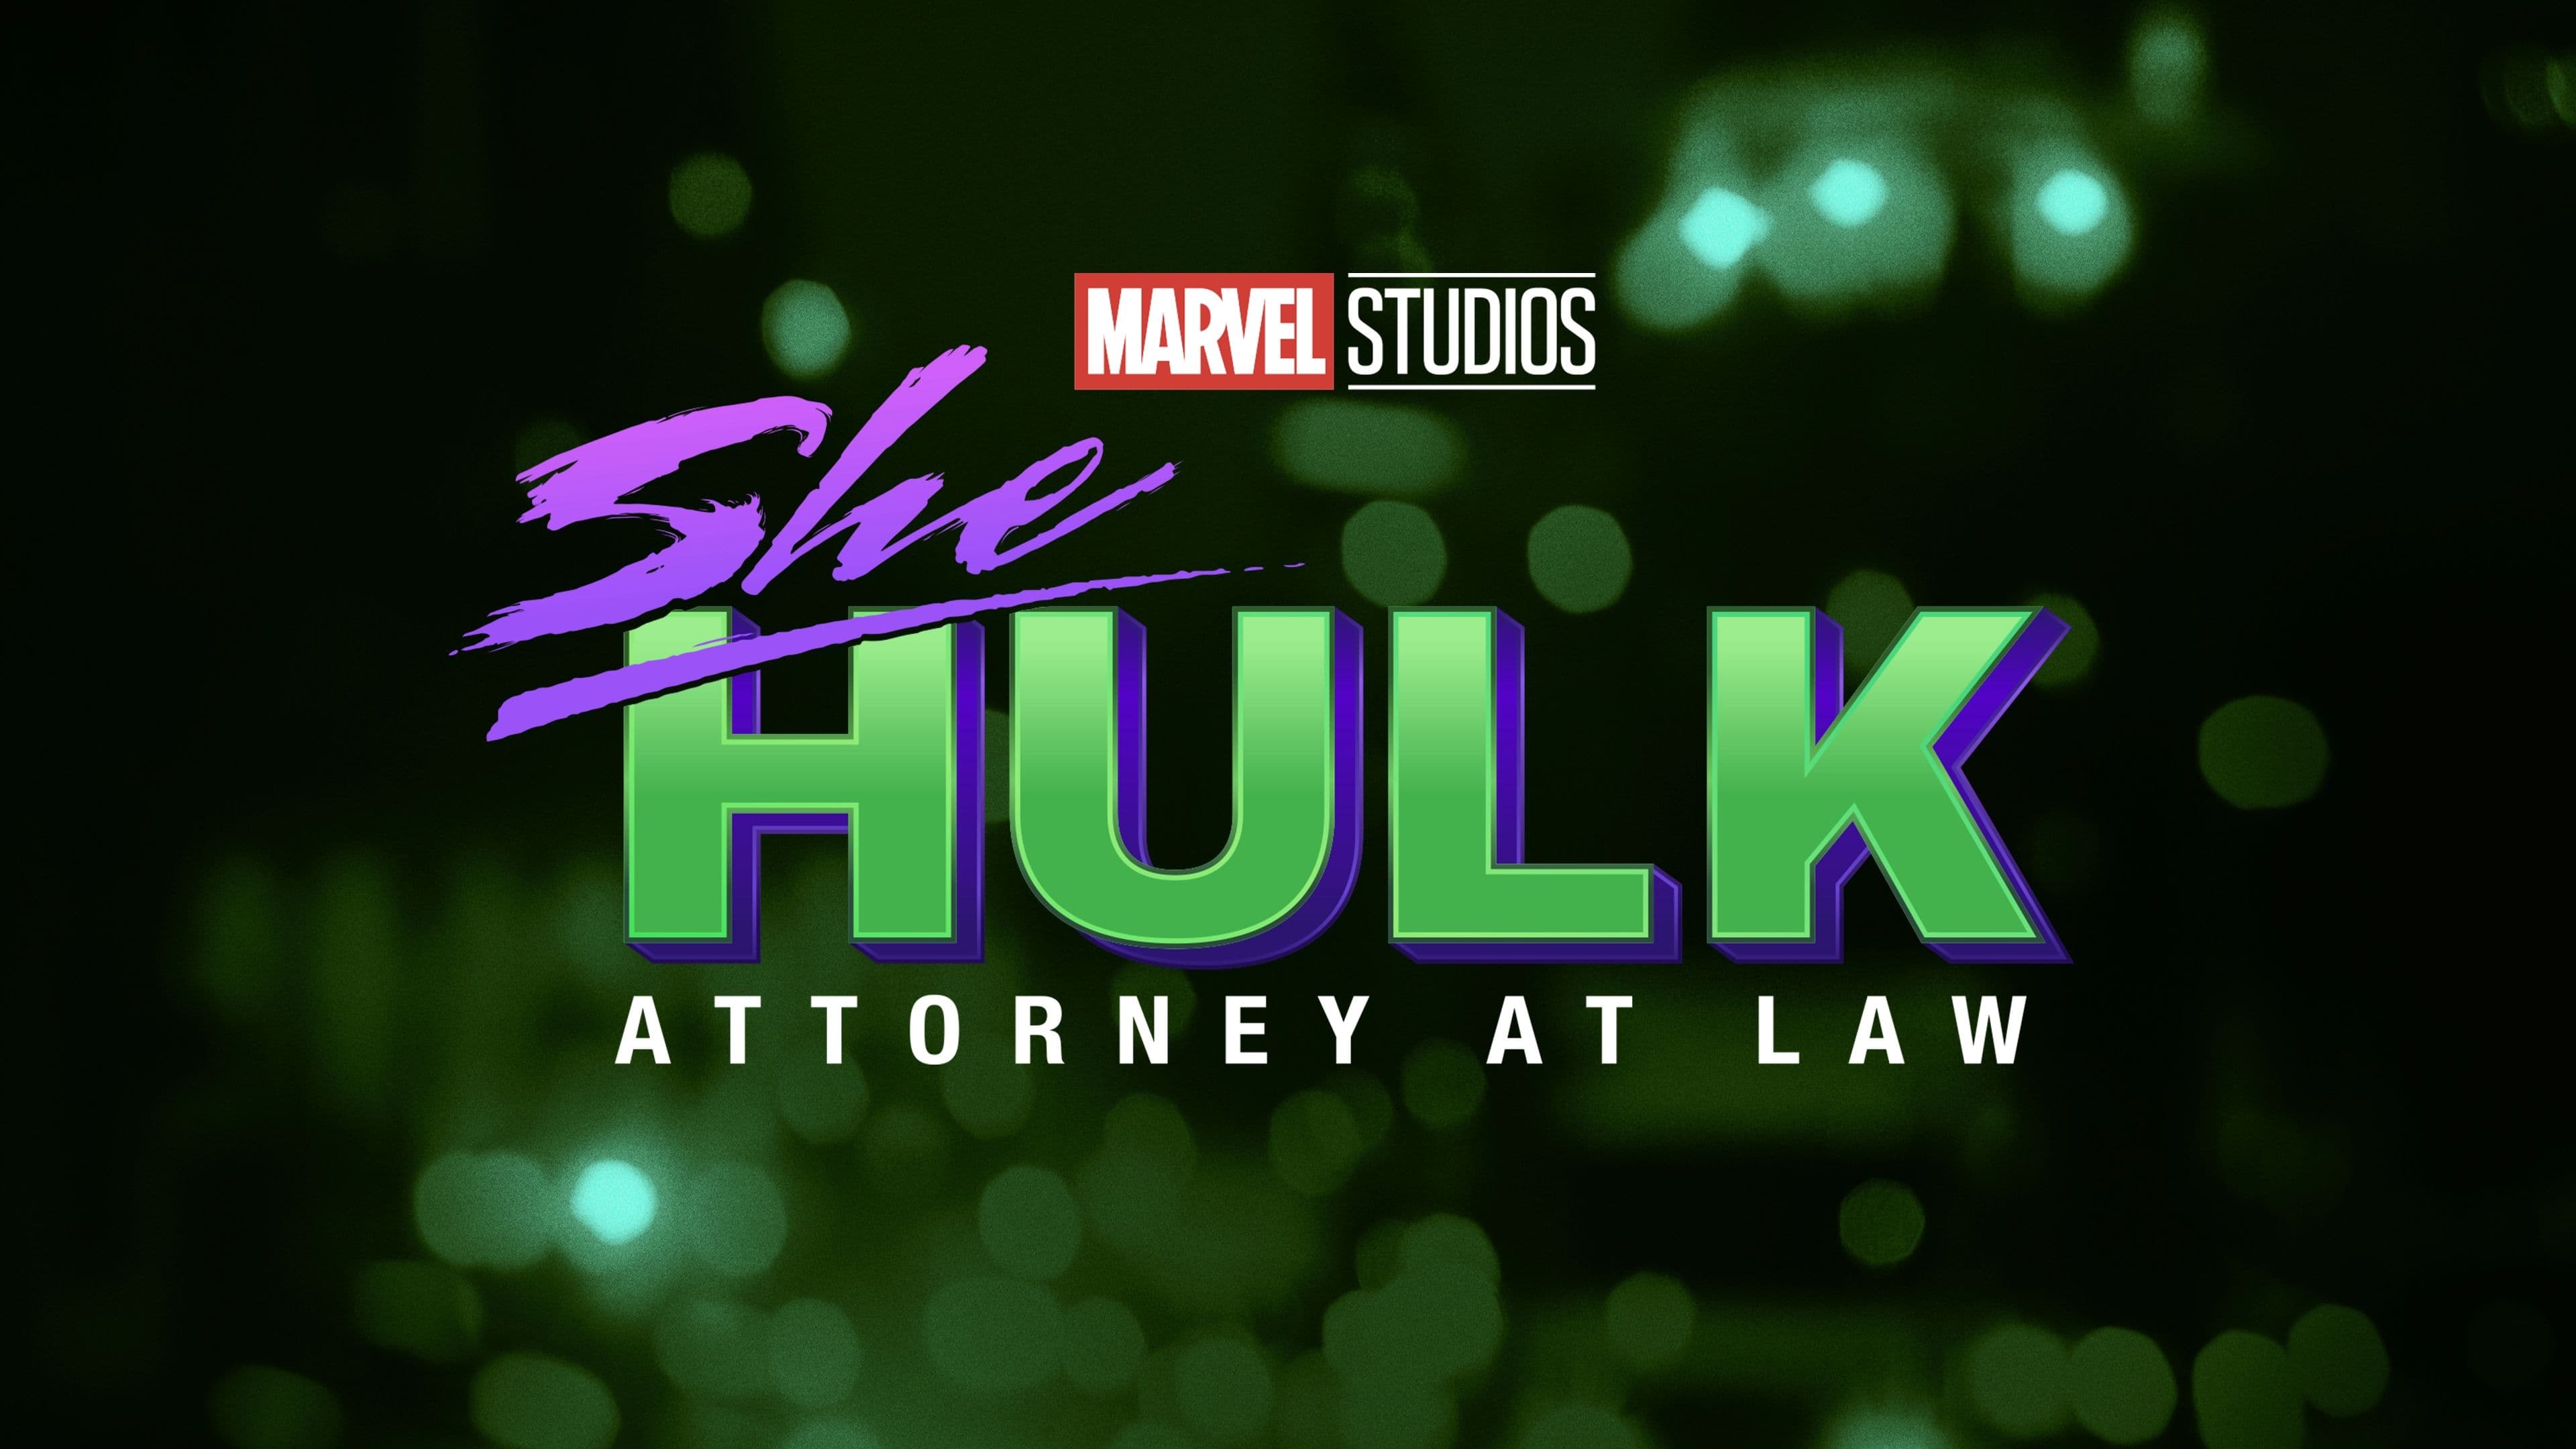 She-Hulk: Attorney at Law - Season 1 Episode 9